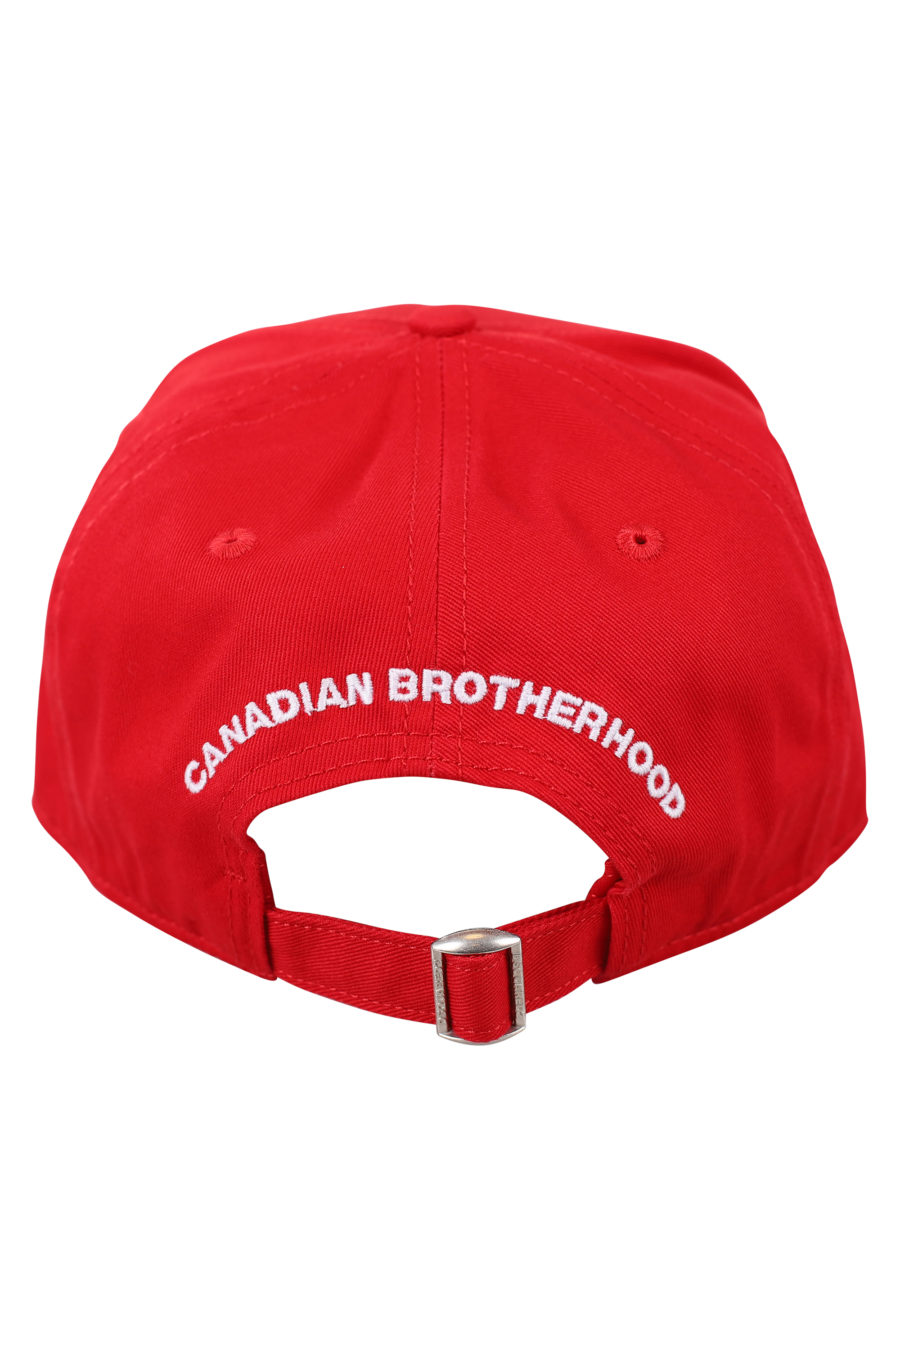 Gorra roja ajustable con logo blanco pequeño - IMG 0470